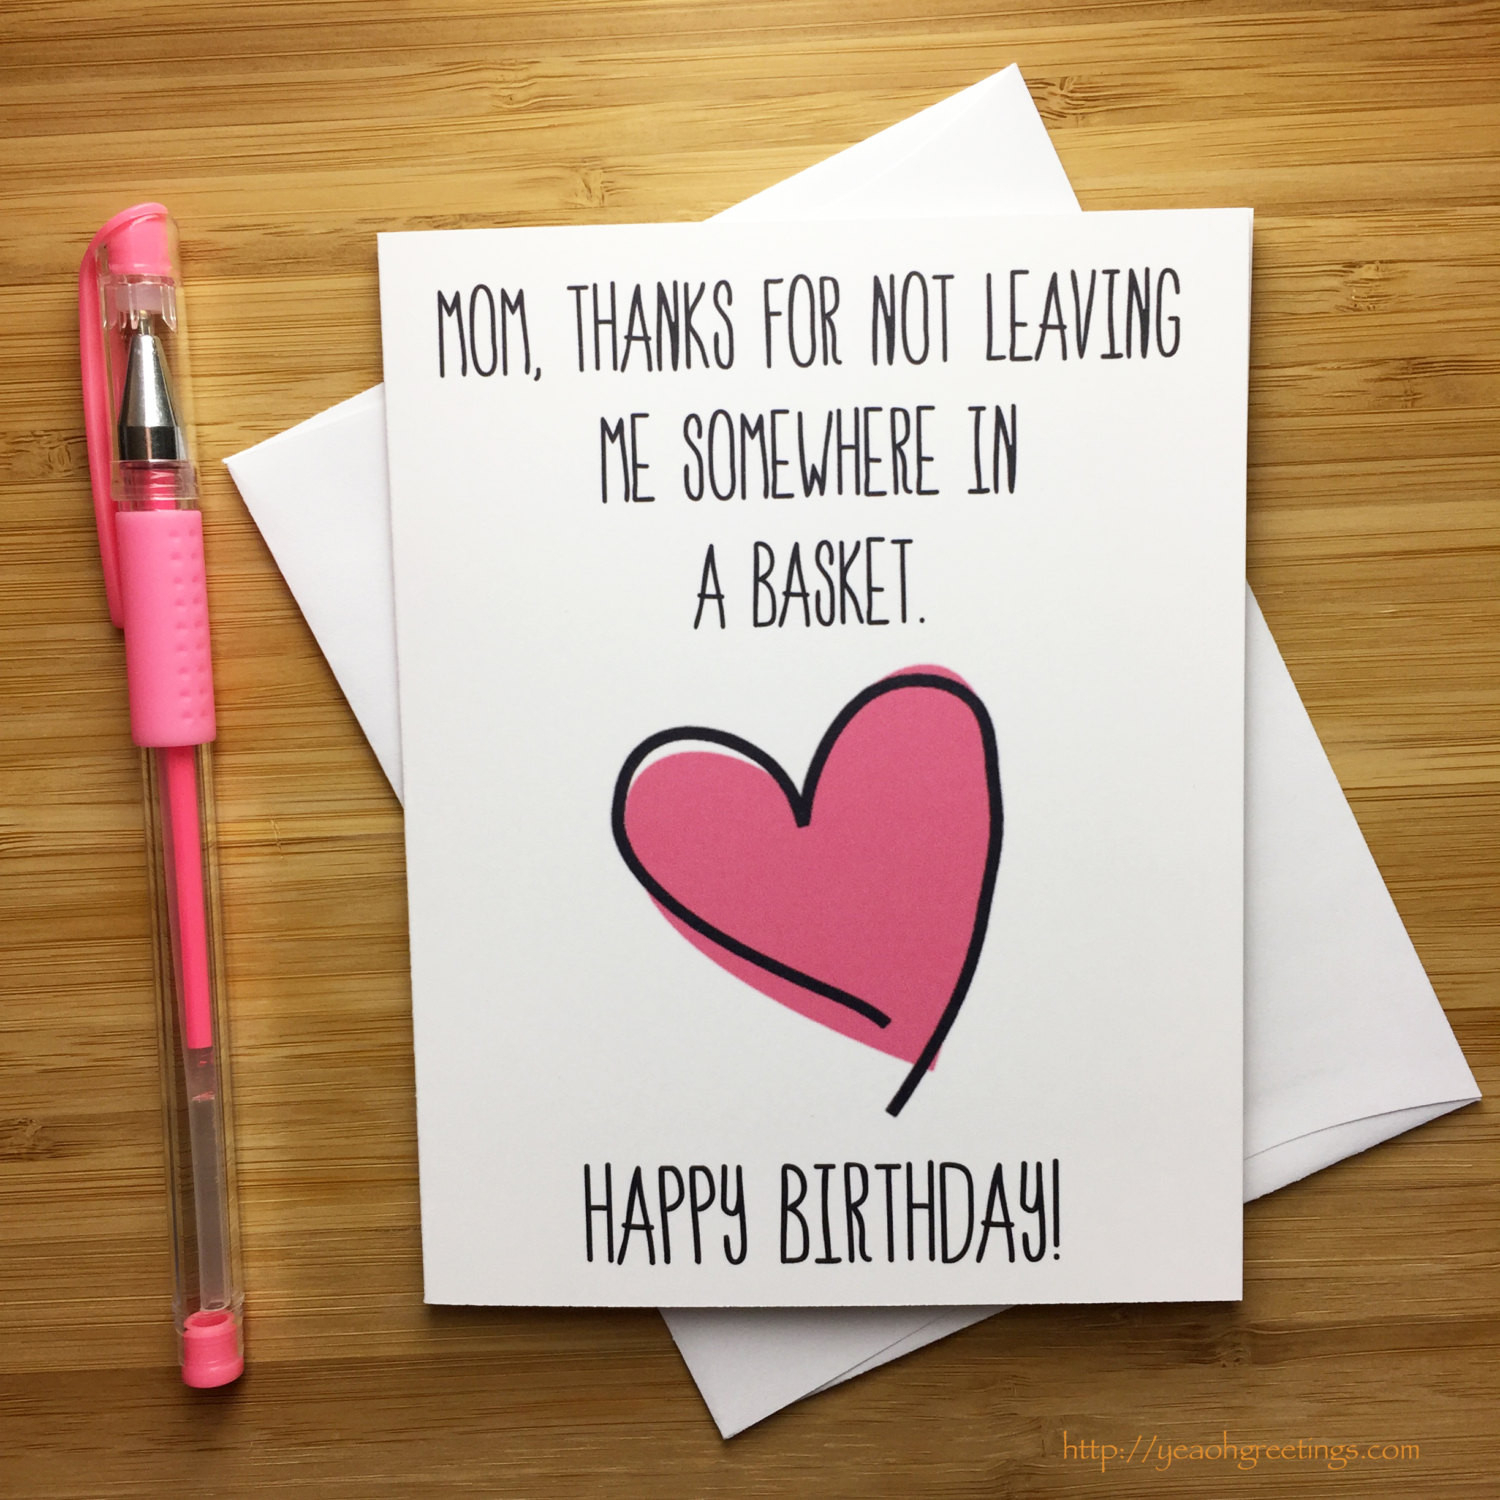 Happy Birthday Card Ideas For Mom 20 Best Ideas Mom Birthday Card Ideas Home Inspiration And Diy